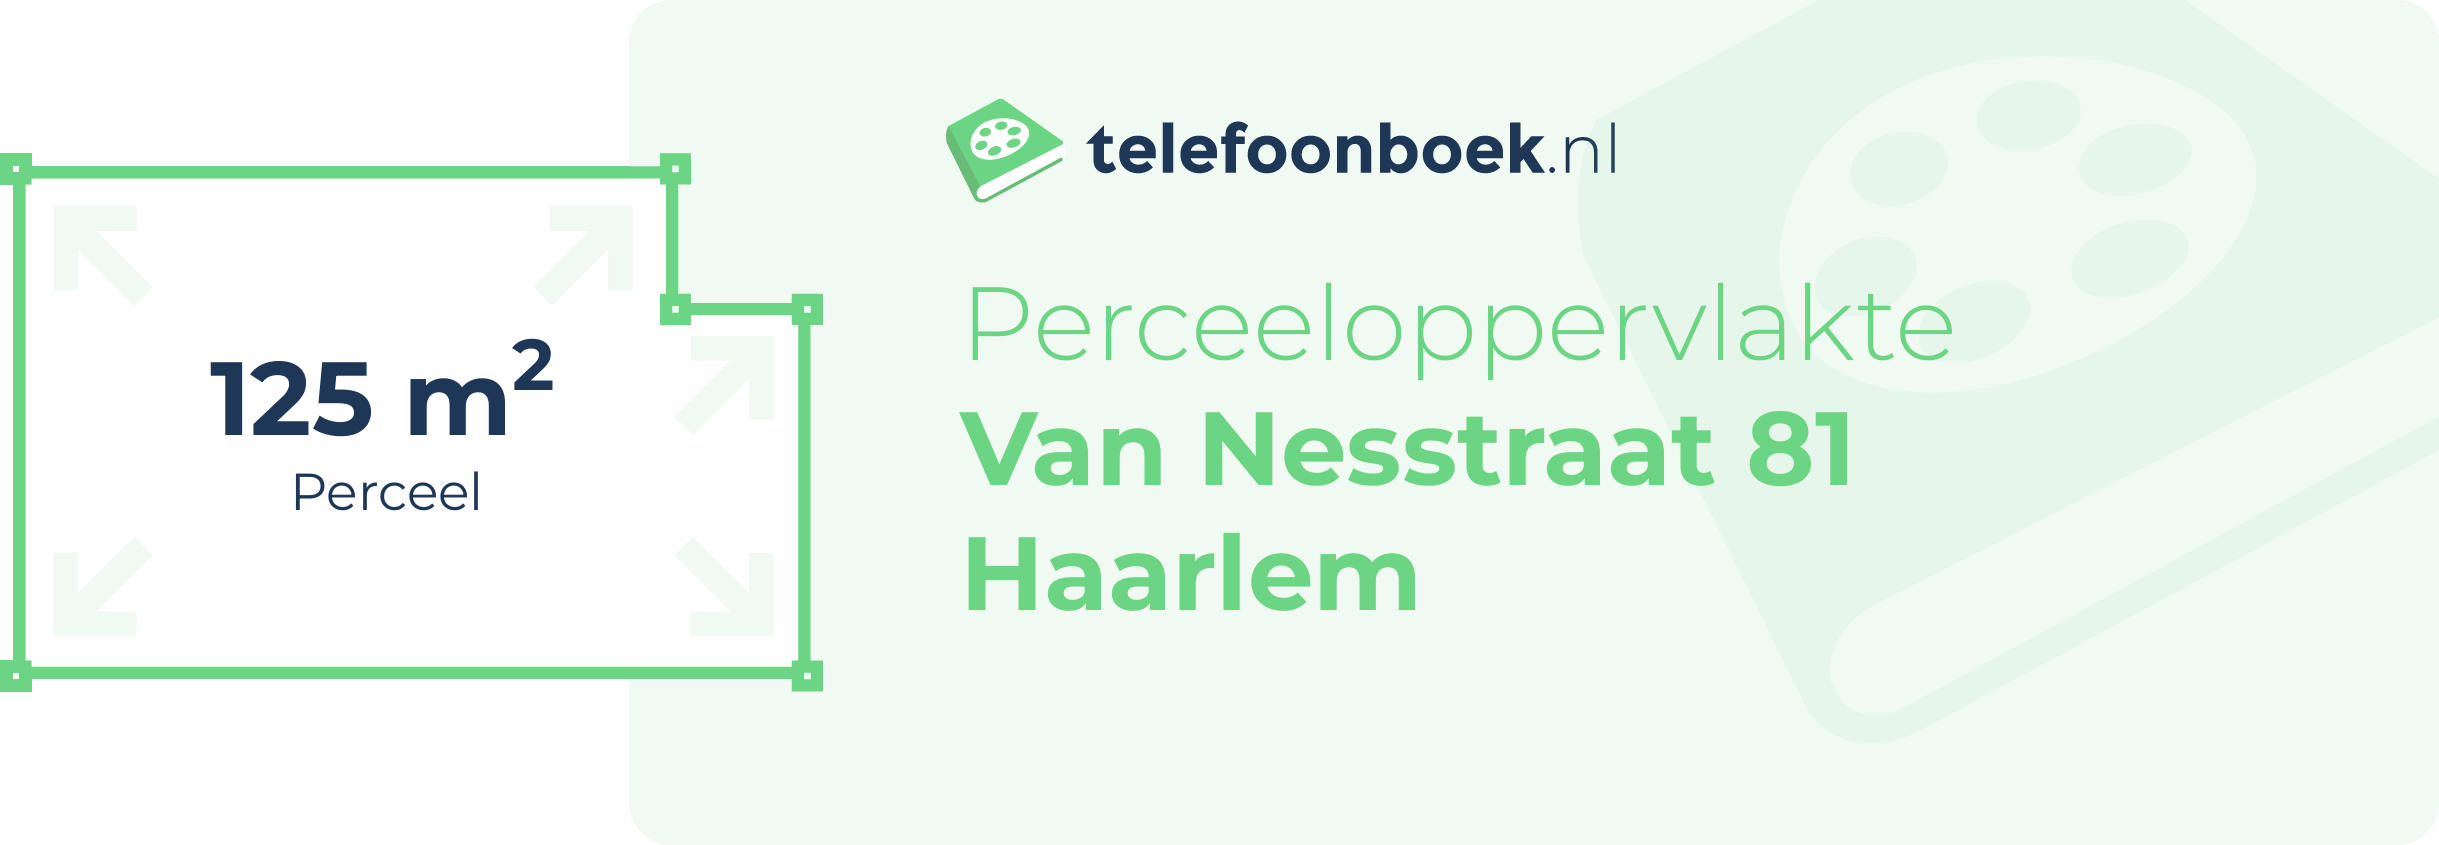 Perceeloppervlakte Van Nesstraat 81 Haarlem